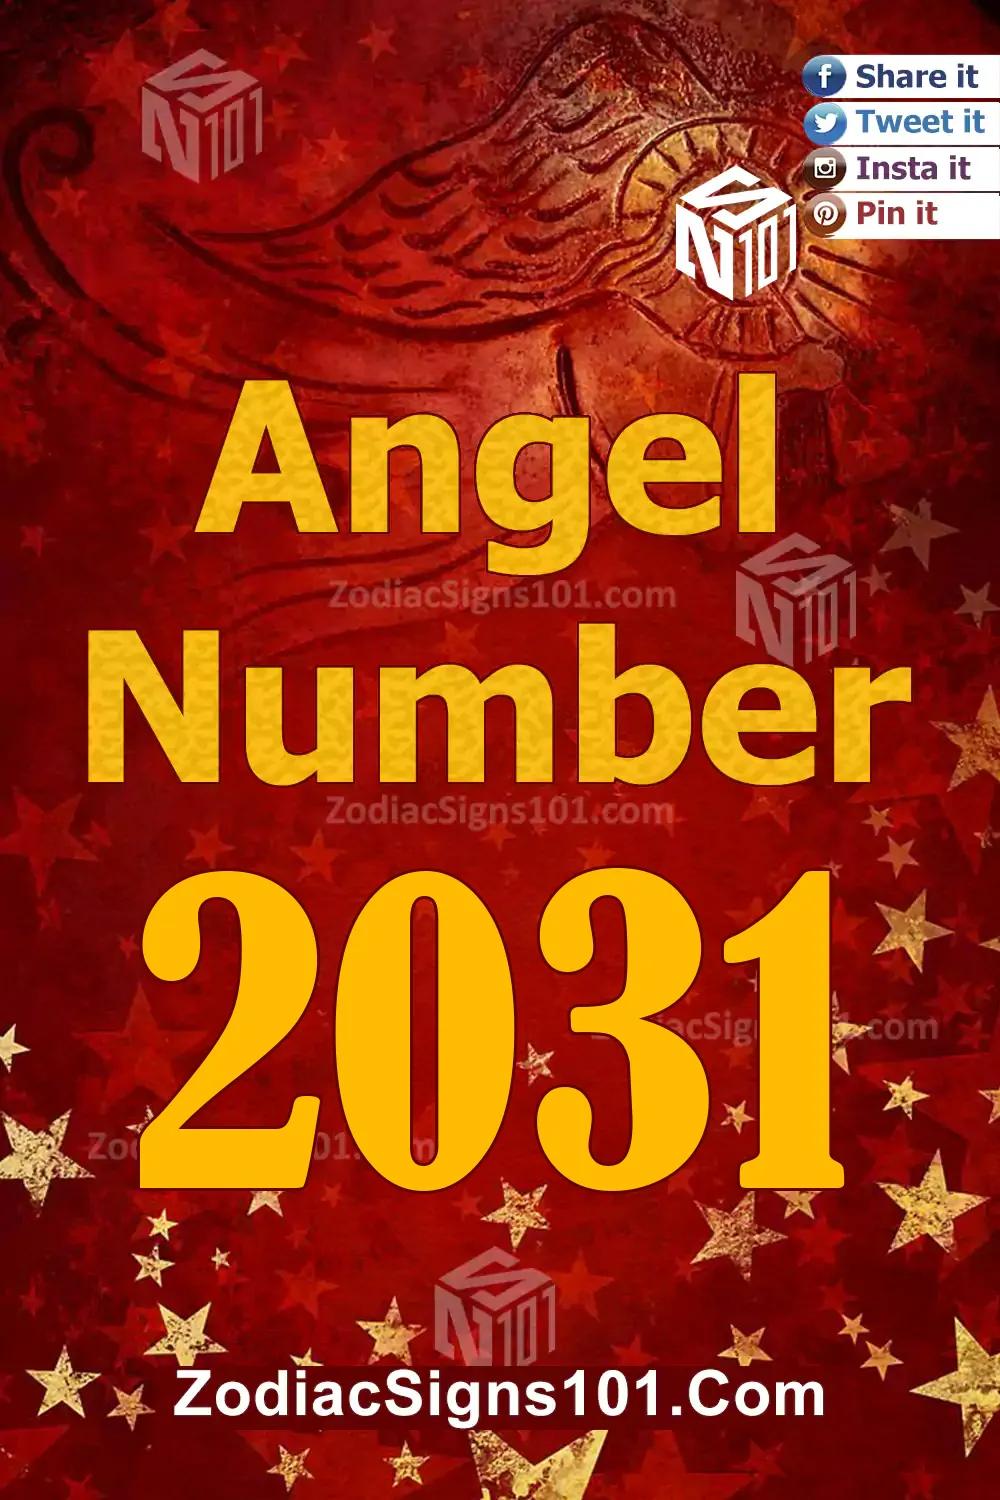 2031-Angel-Number-Meaning.jpg